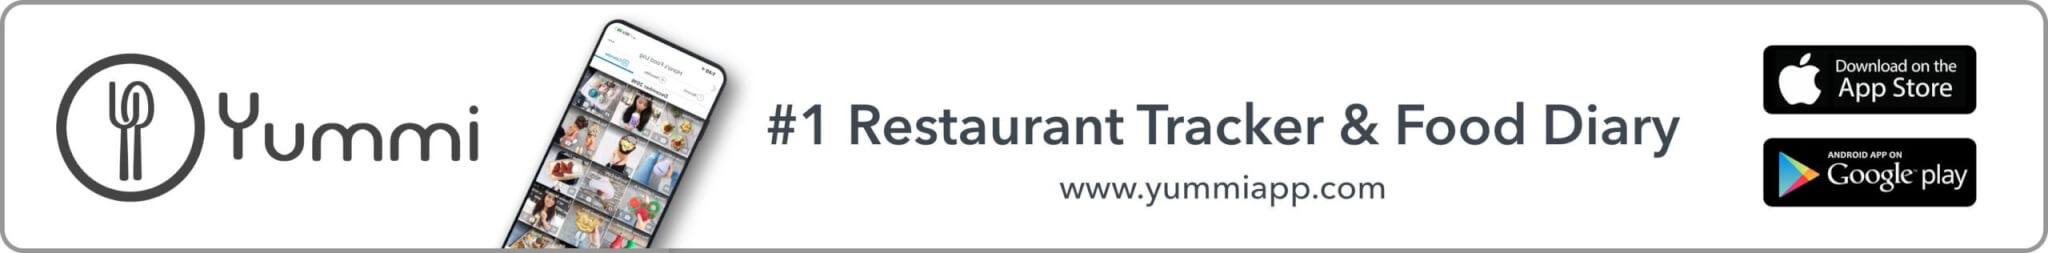 Yummi - #1 Restaurant Tracker & Food Diary 